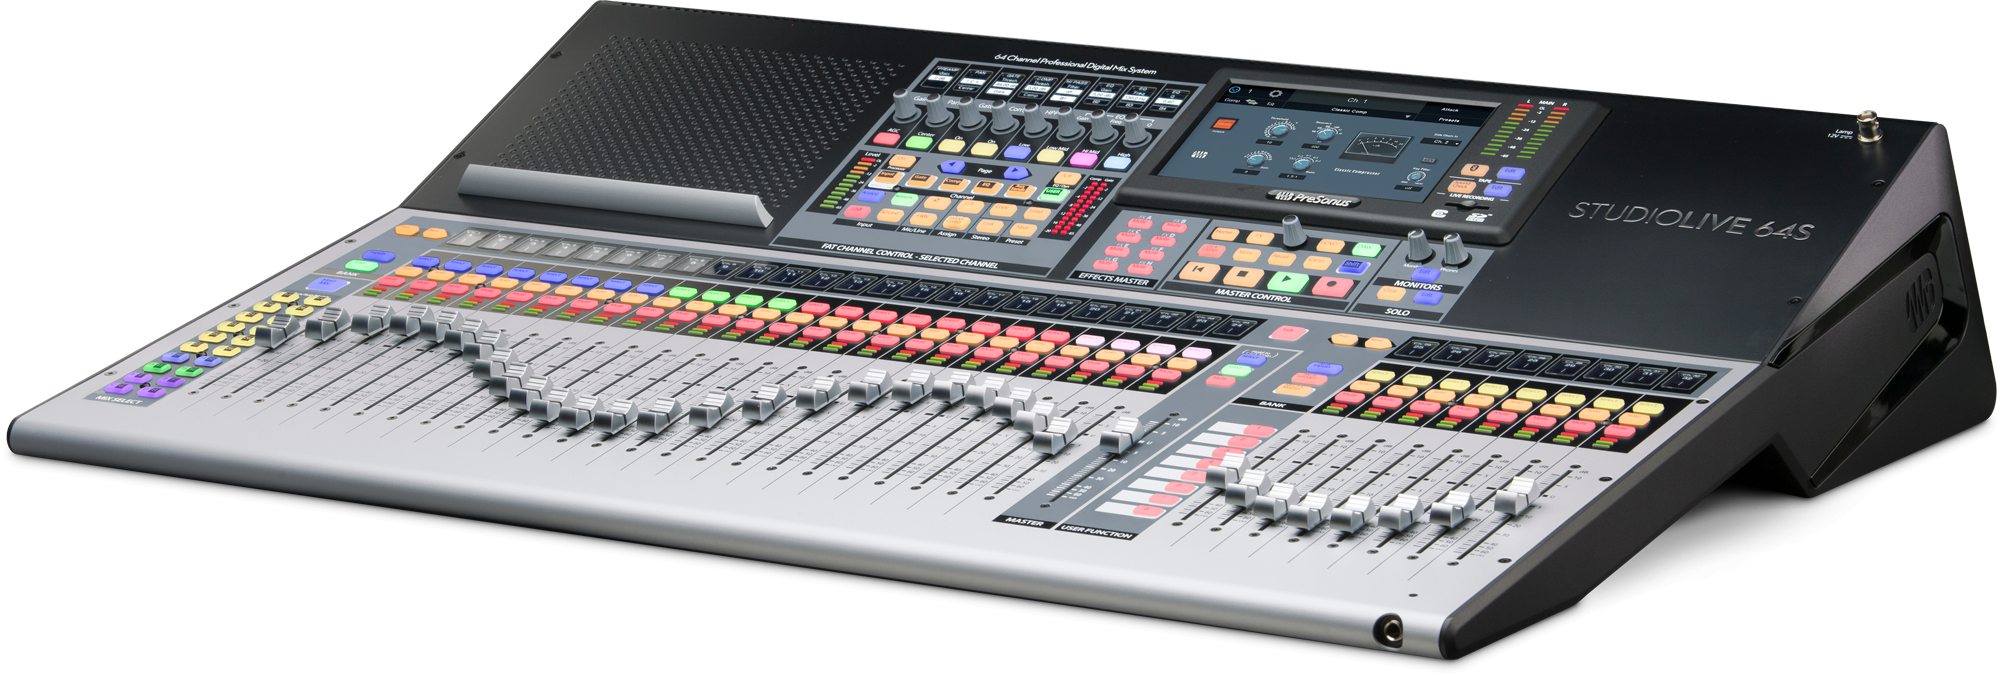 Presonus StudioLive 64S Series III - Mixing Console - Professional Audio Design, Inc